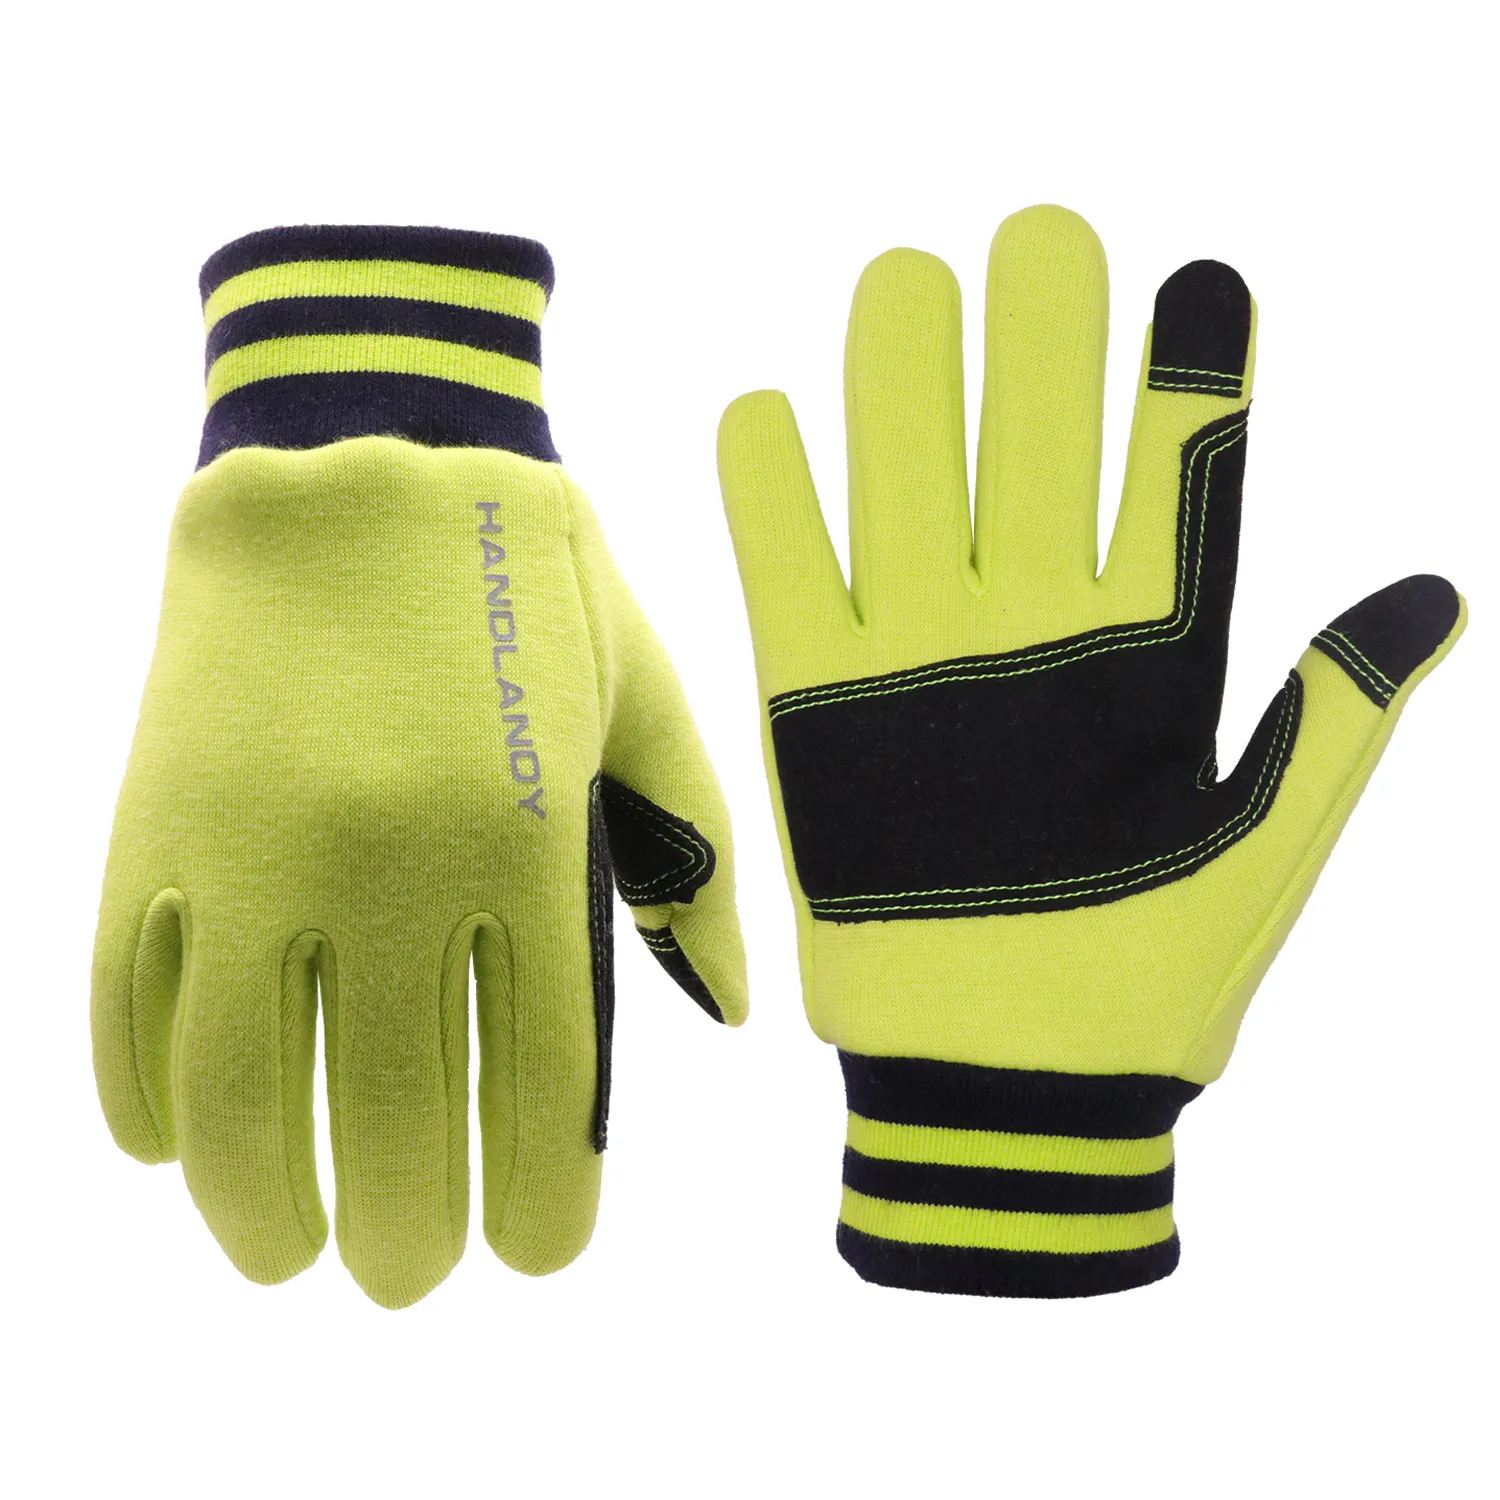 Handlandy перчатки рабочие. Kids Sport Glove open fingers. Перчатки для 7 лет